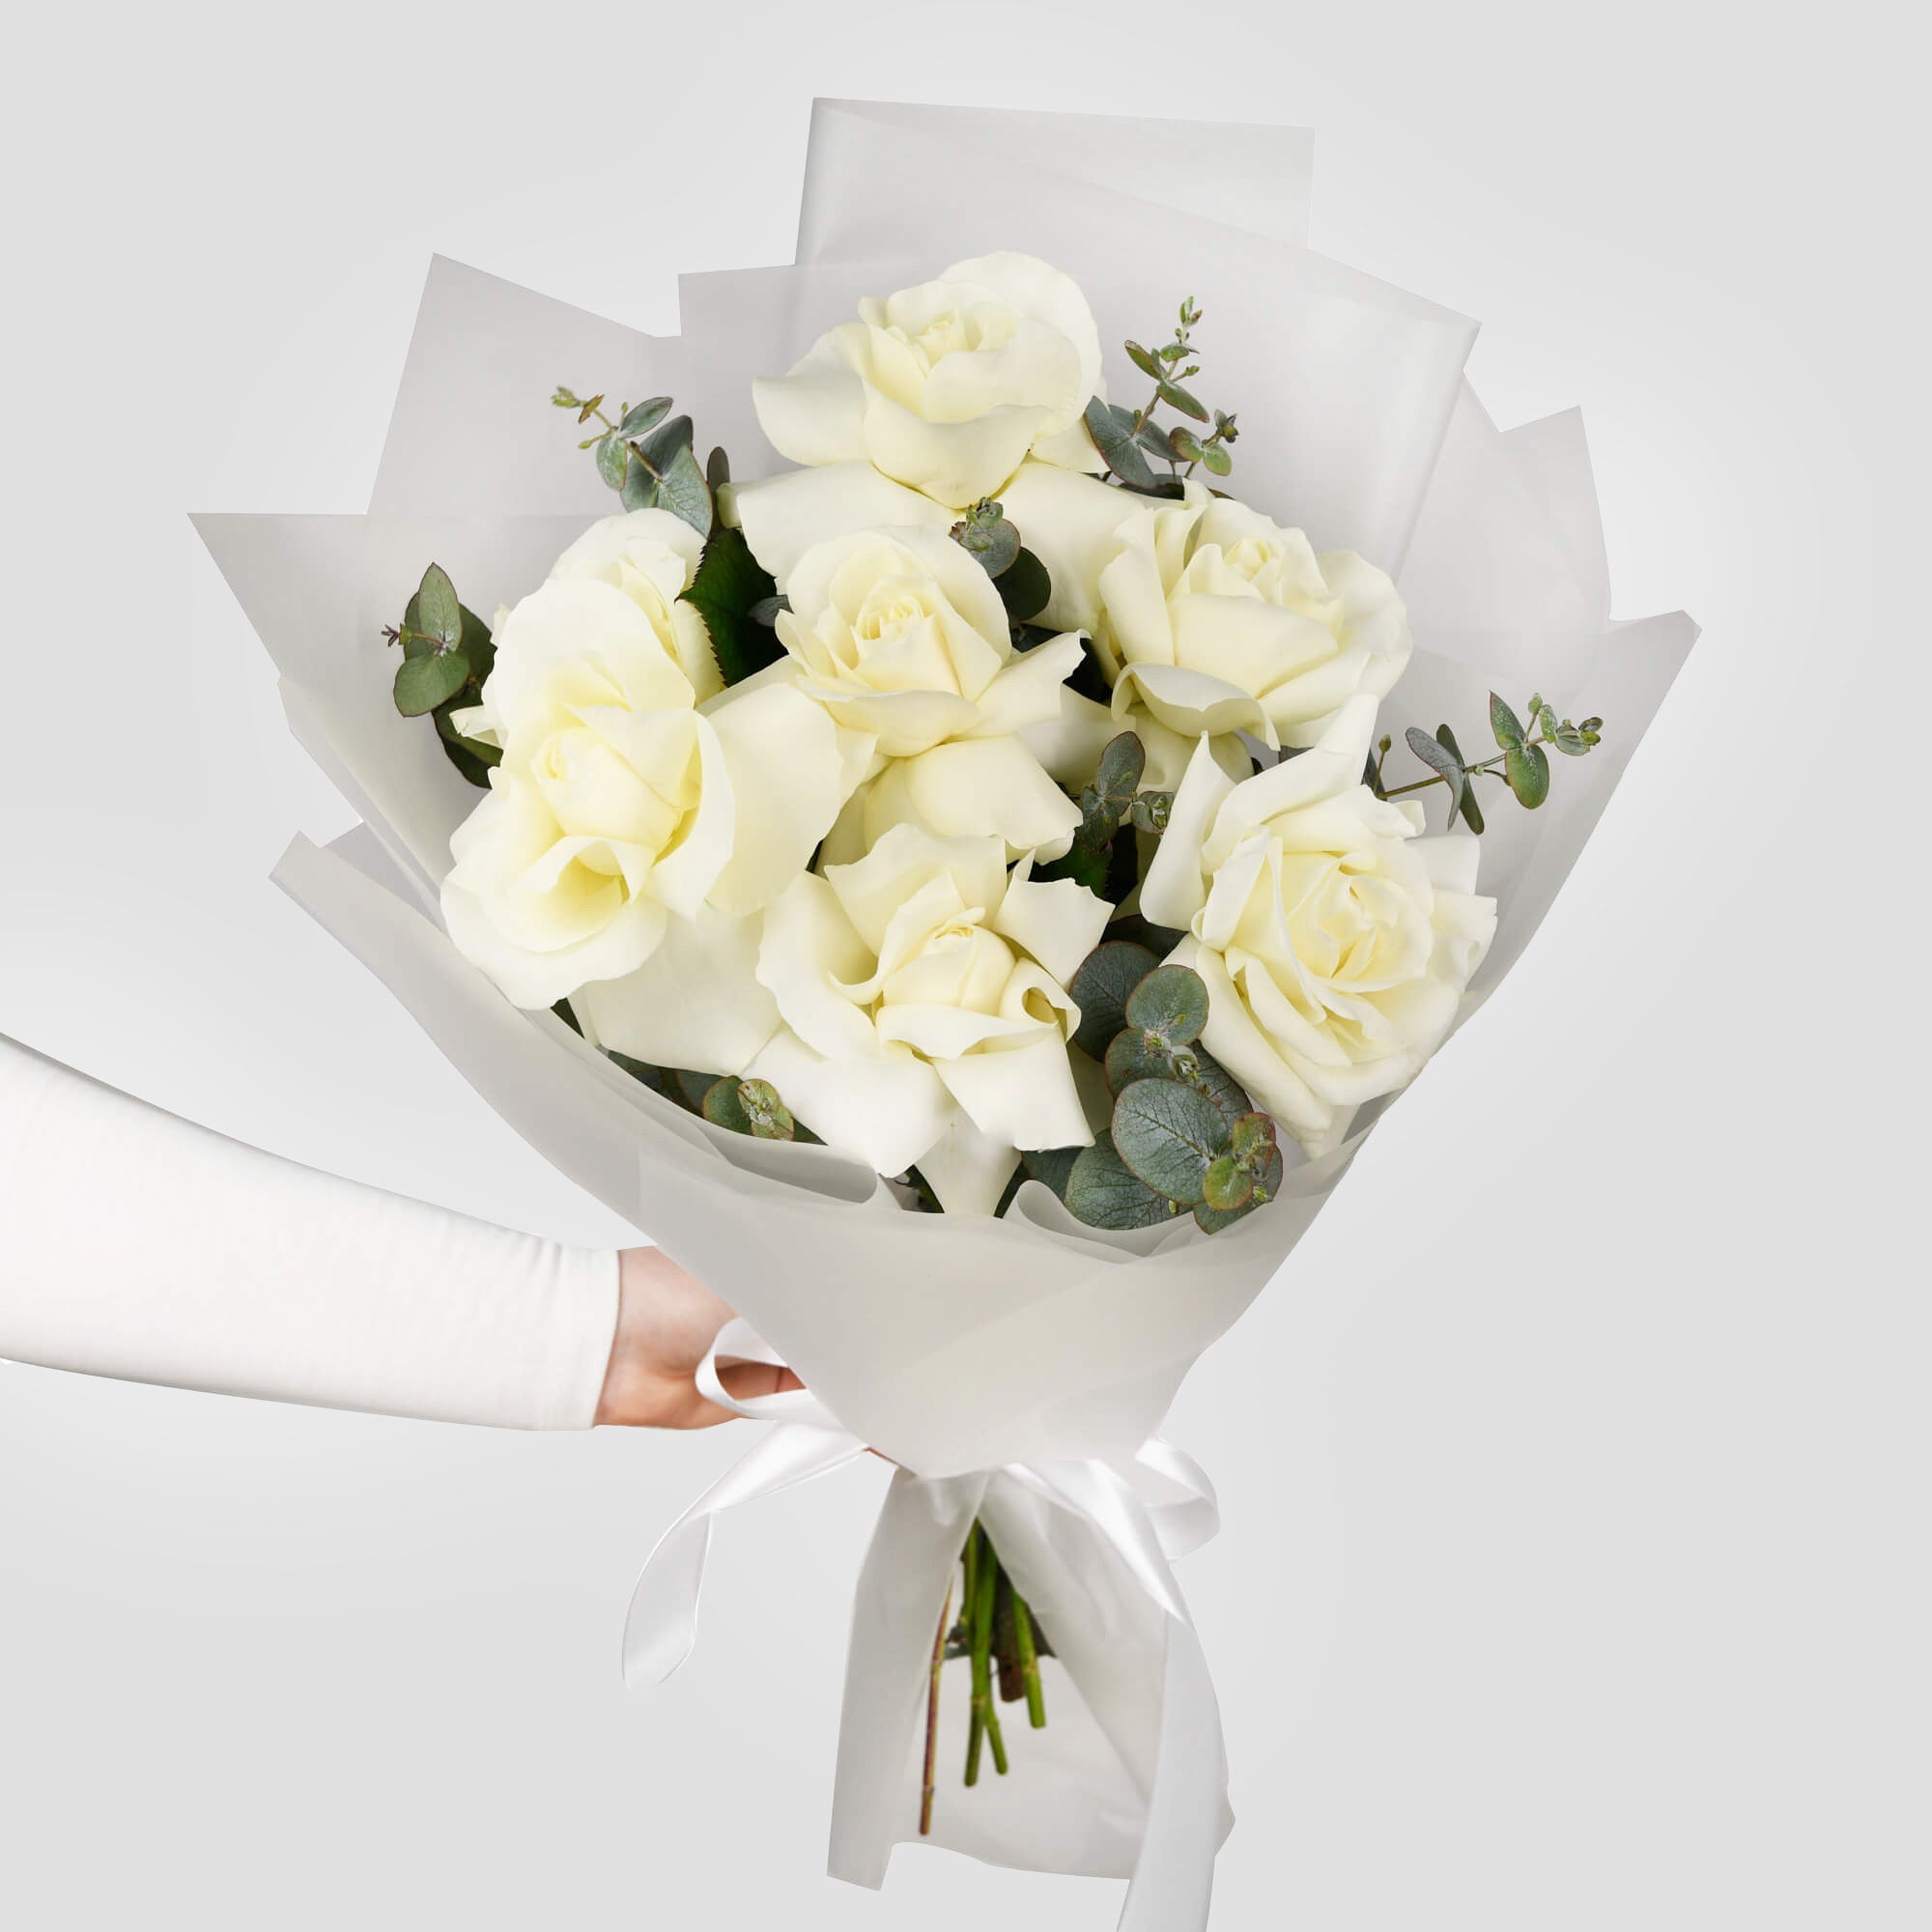 Buchet cu 7 trandafiri albi speciali si eucalipt, 1